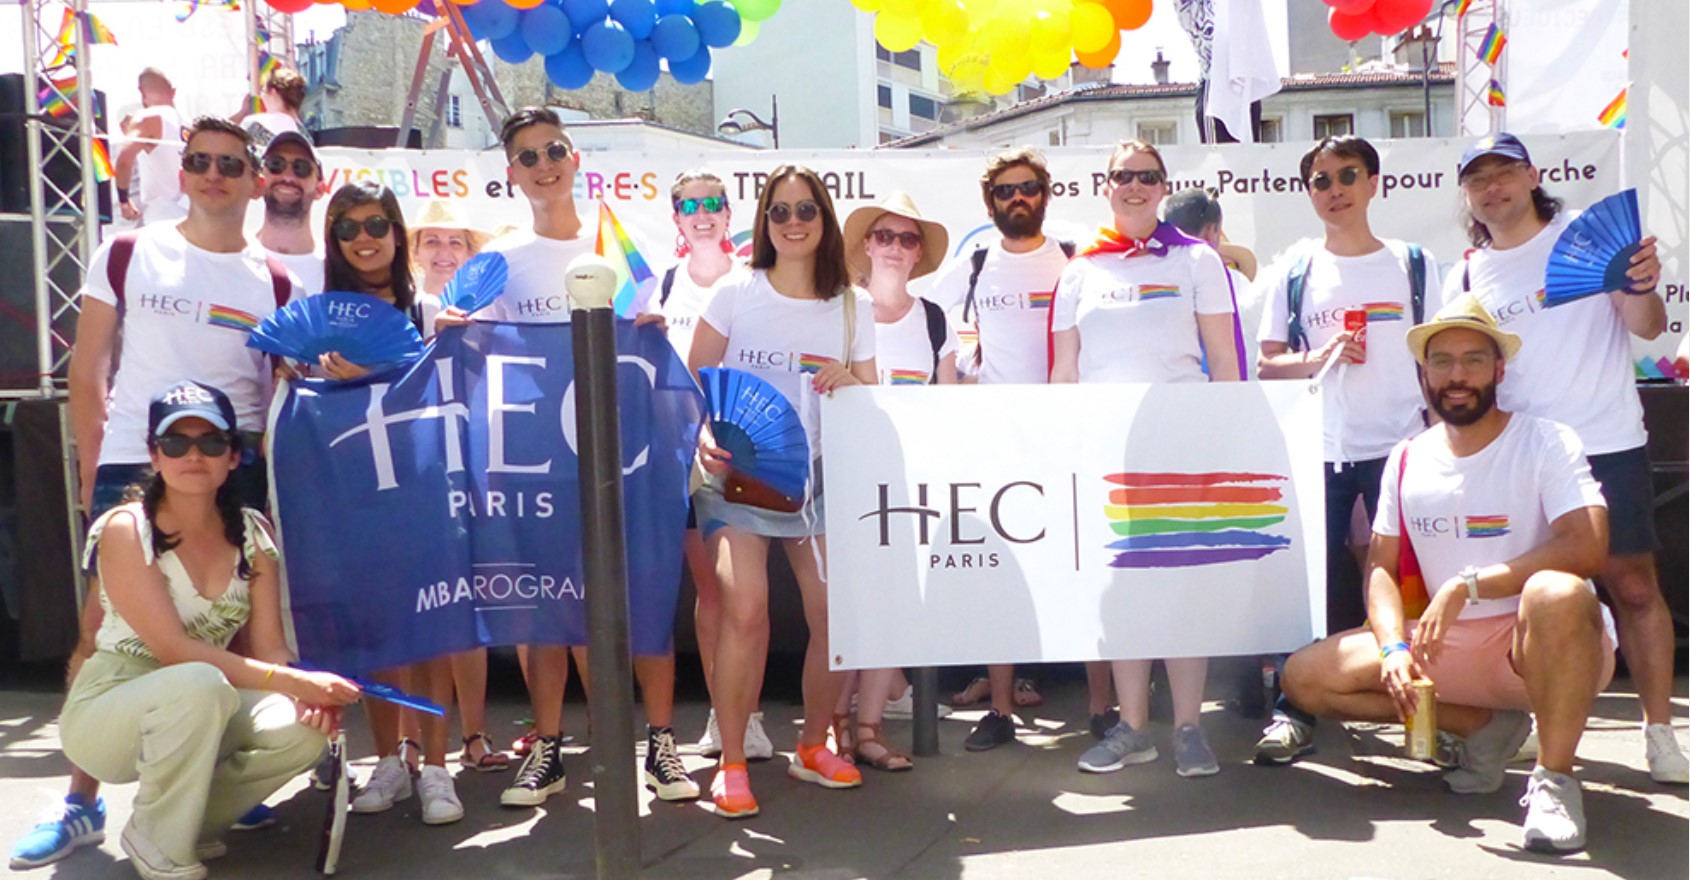 HEC Students at the Pride Parade (Paris)